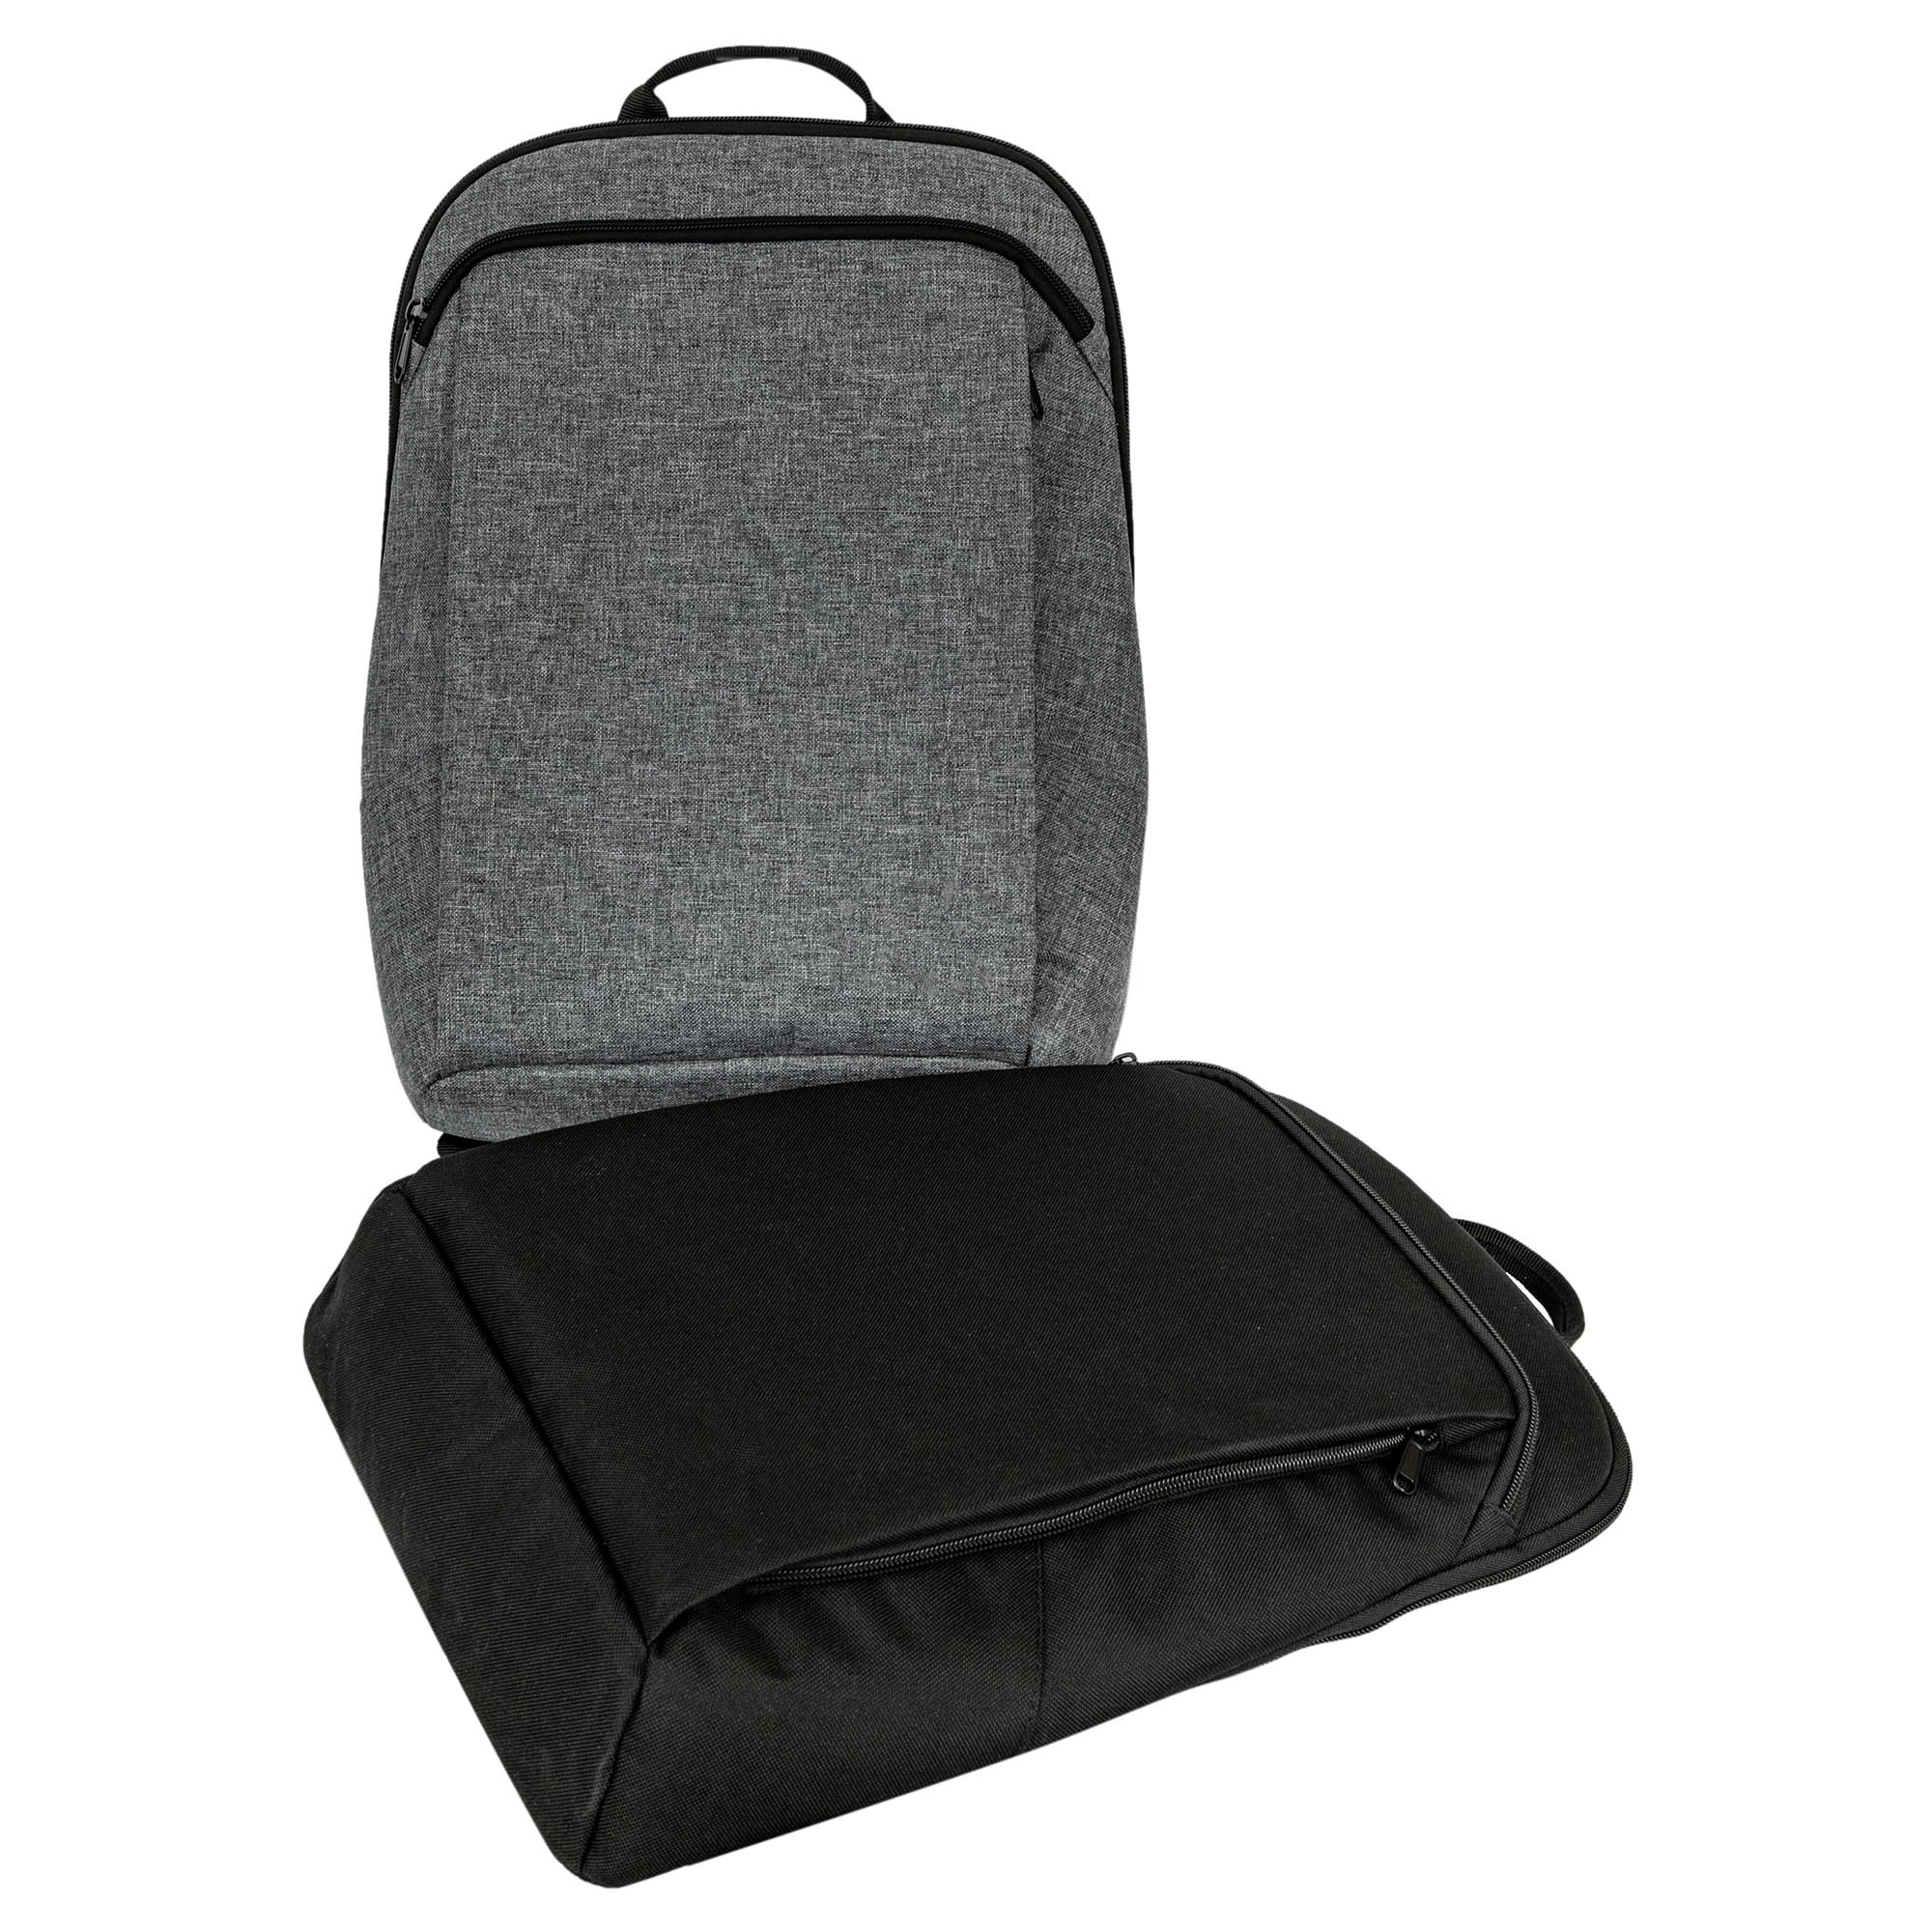 Durable Havey Duty Business Travel Laptop Backpack for Women Men